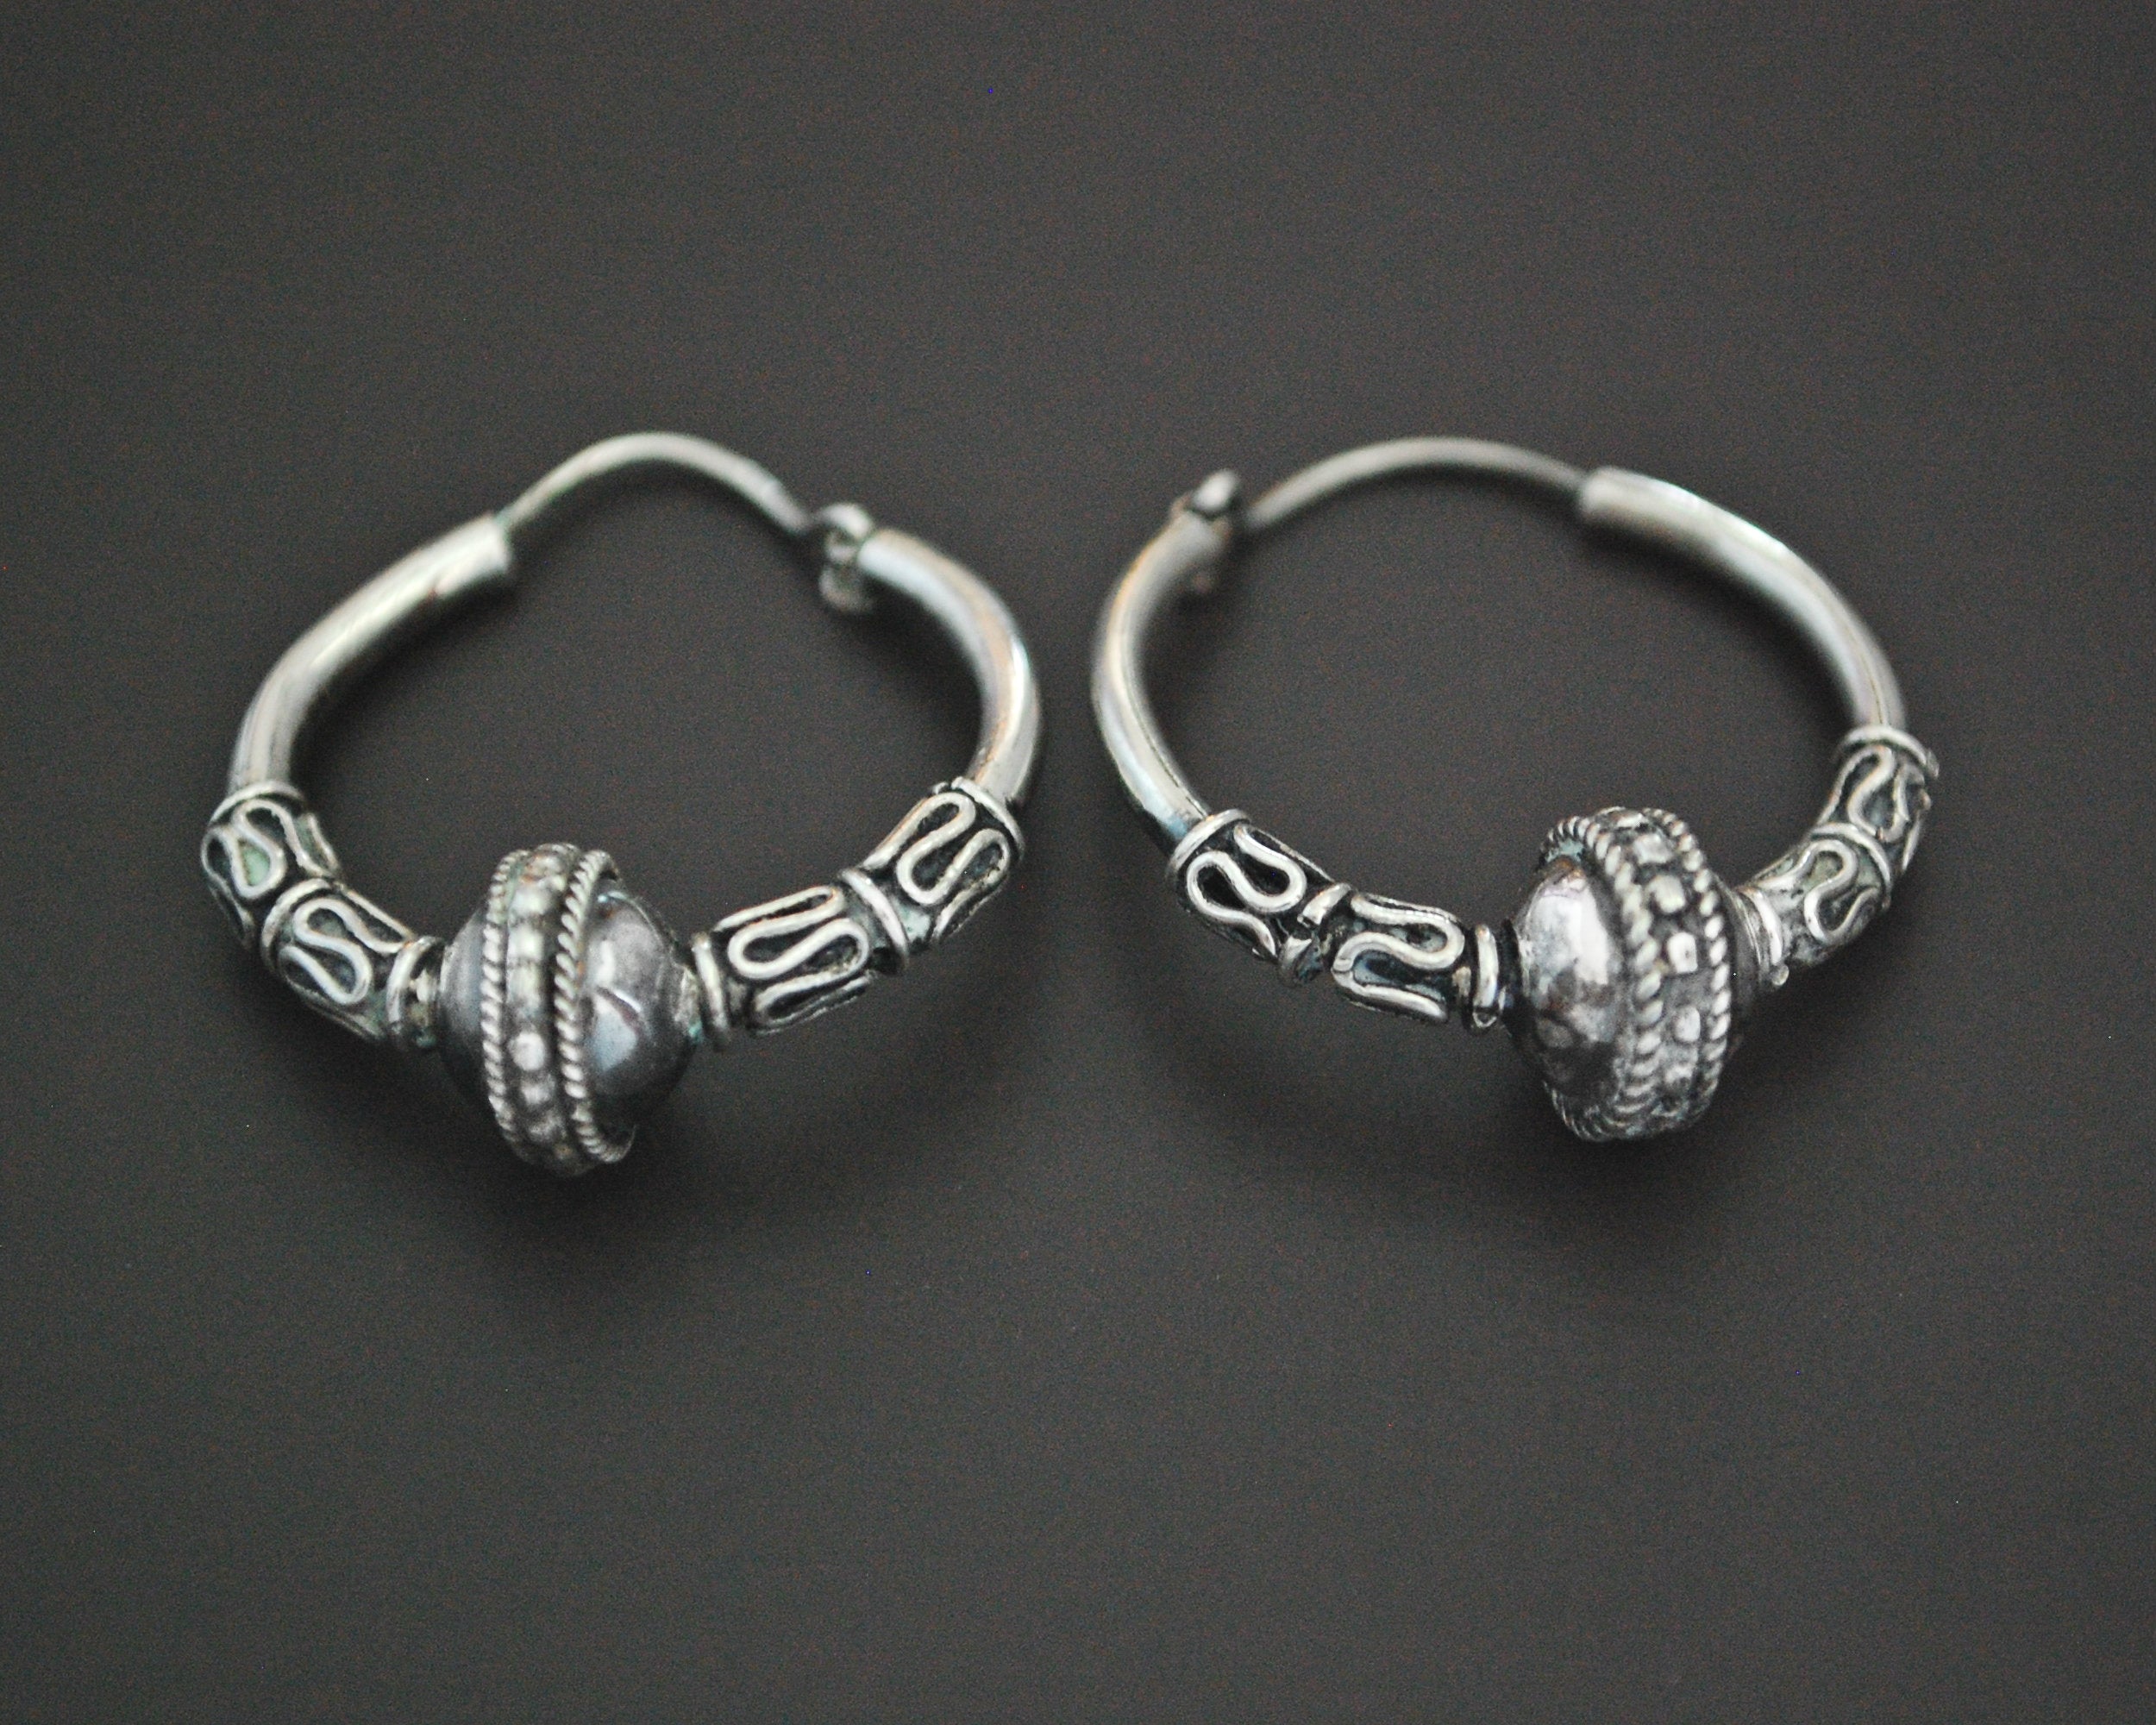 Ethnic Bali Hoop Earrings - SMALL/MEDIUM